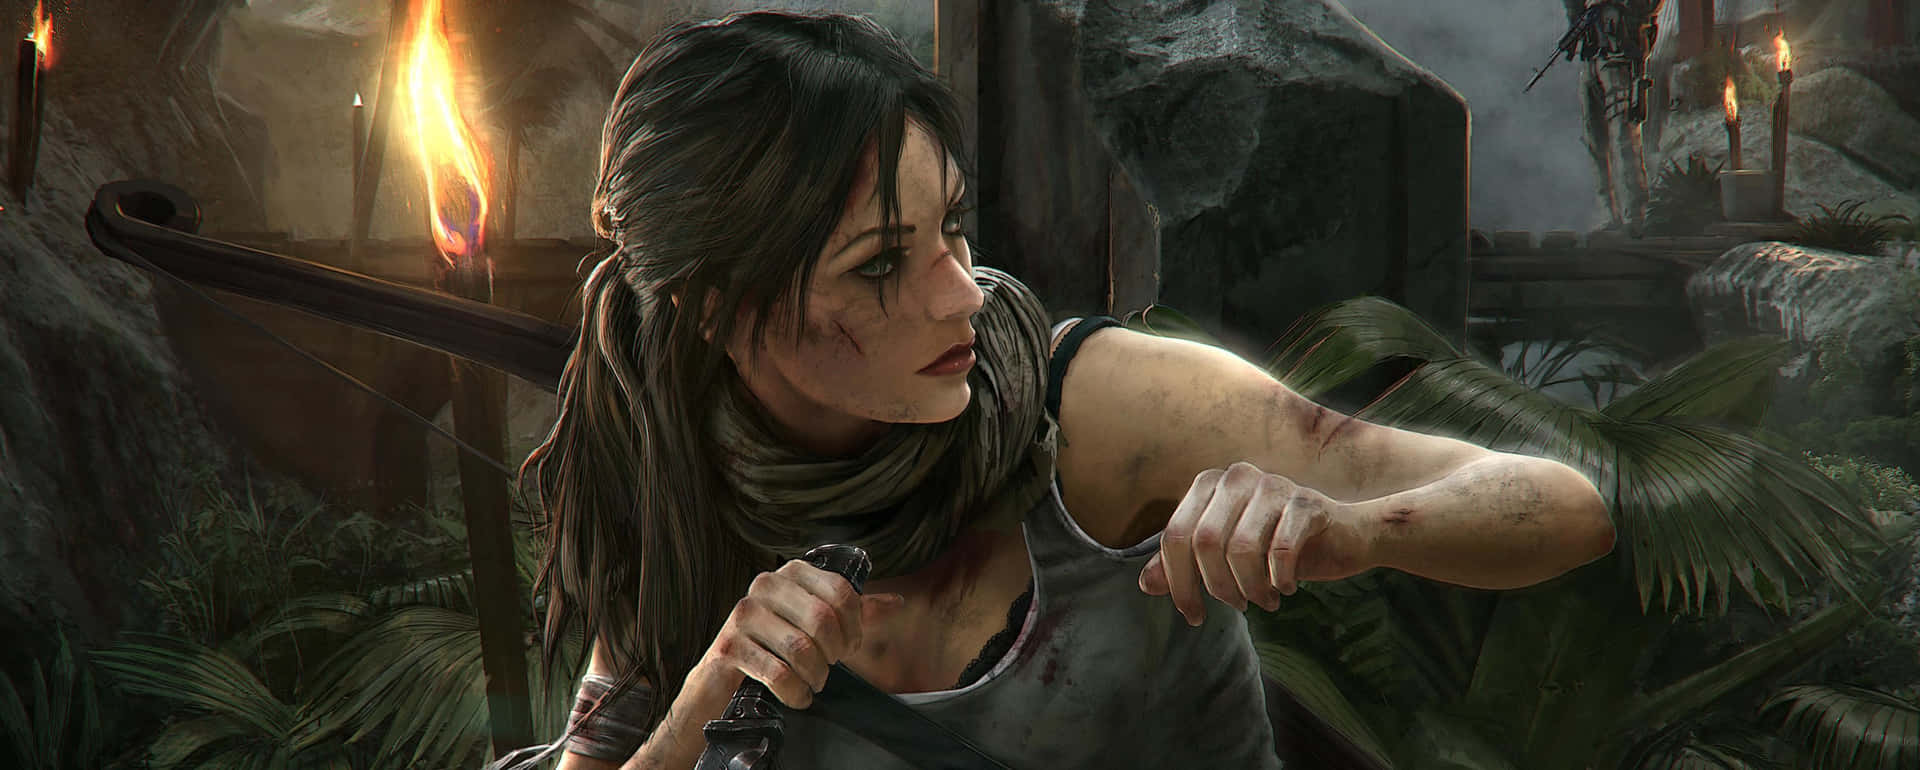 Fondode Pantalla De Lara Croft Combat 3440x1440p Rise Of The Tomb Raider